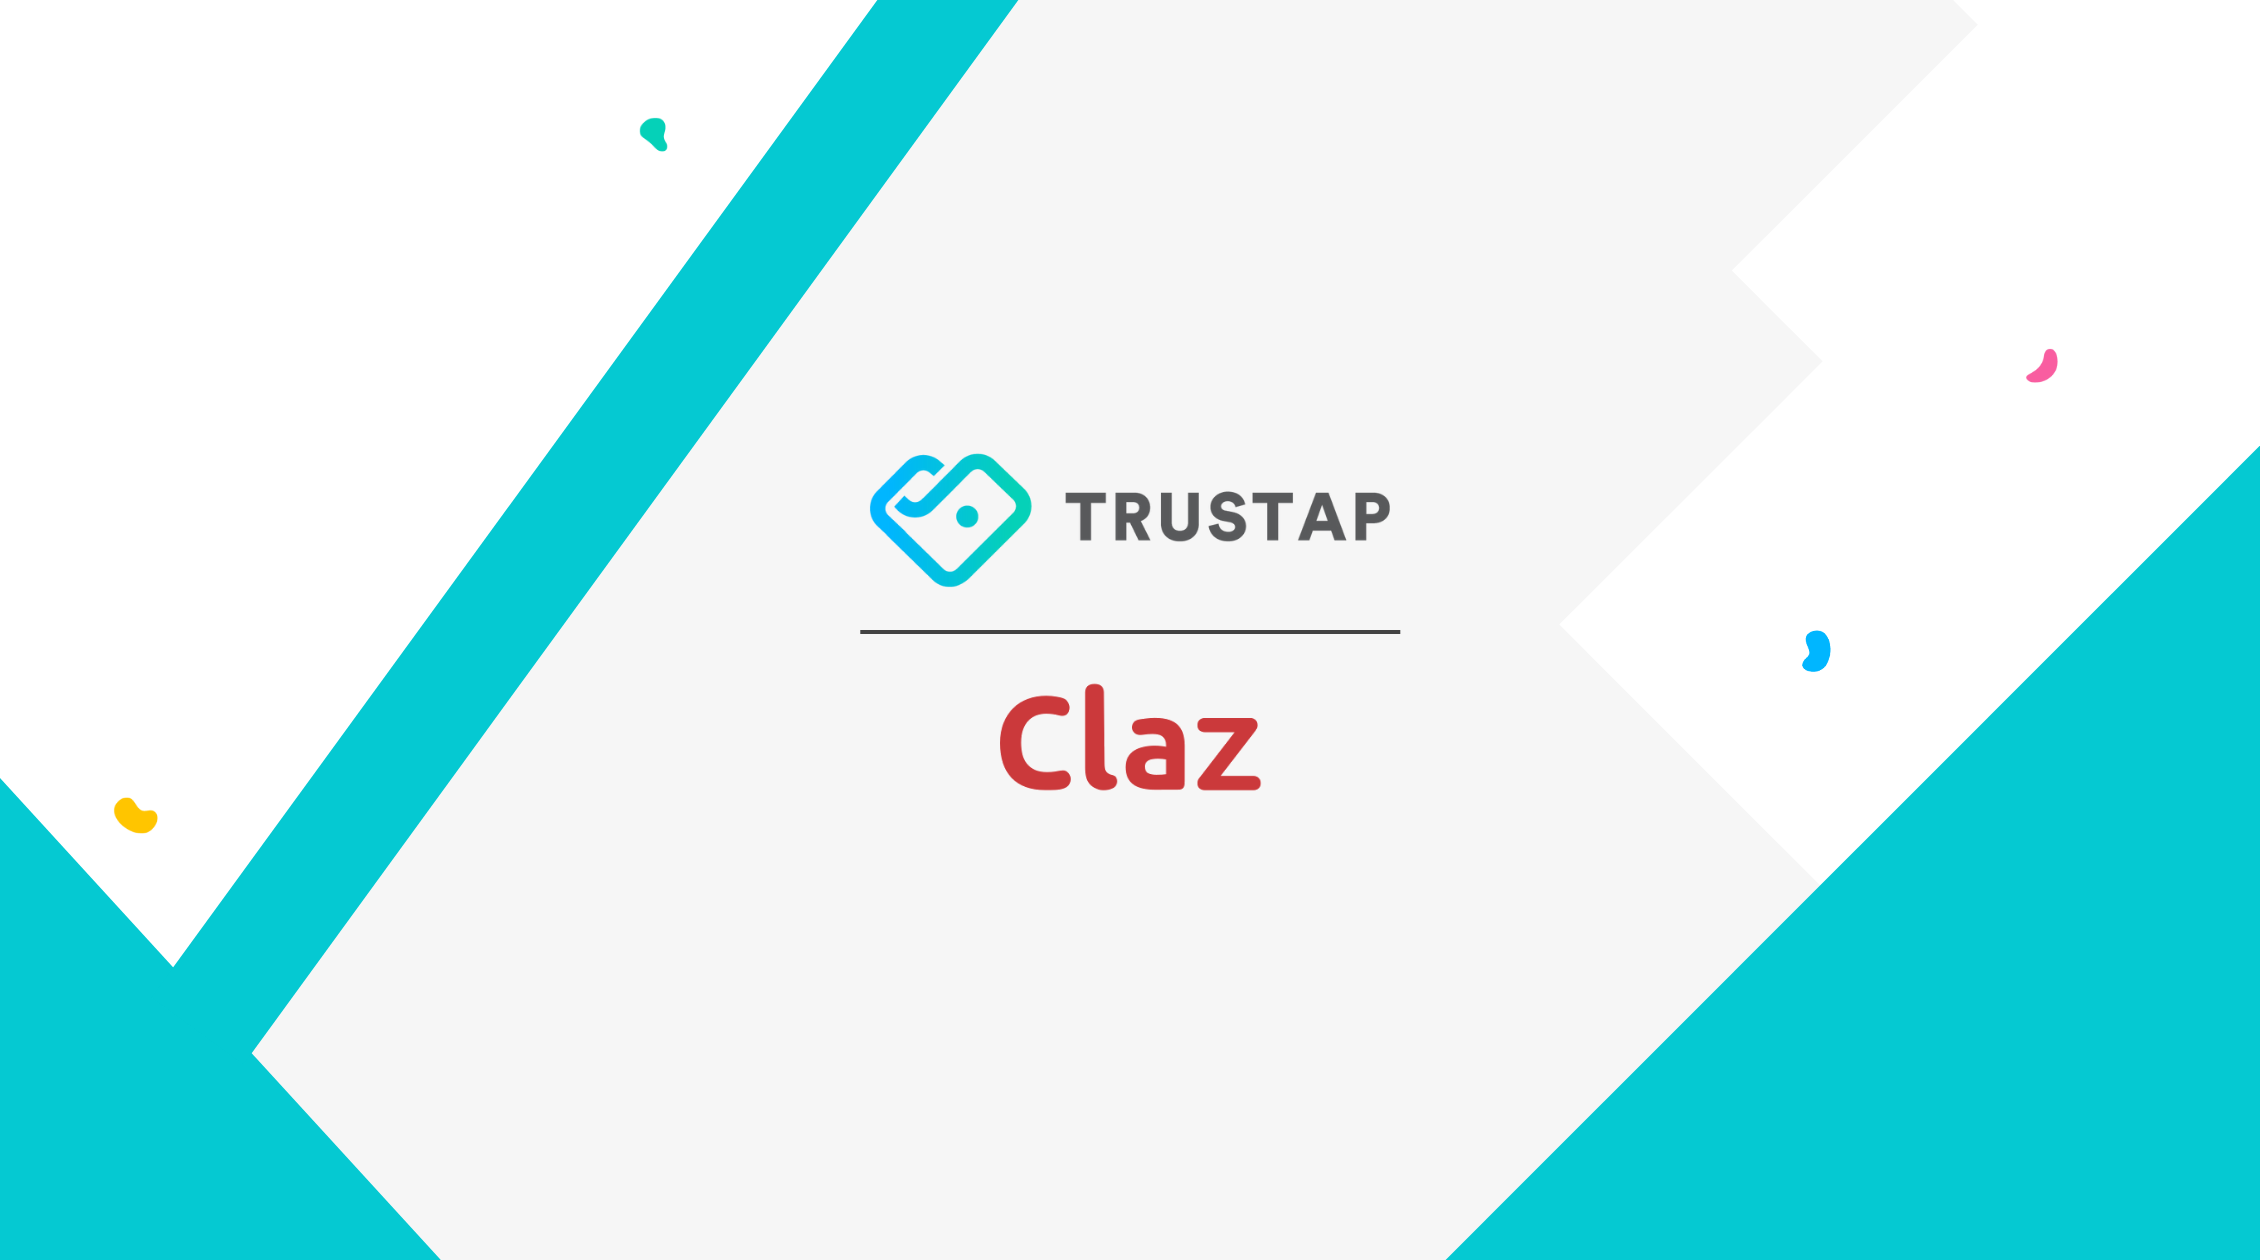 How to use Trustap on Claz